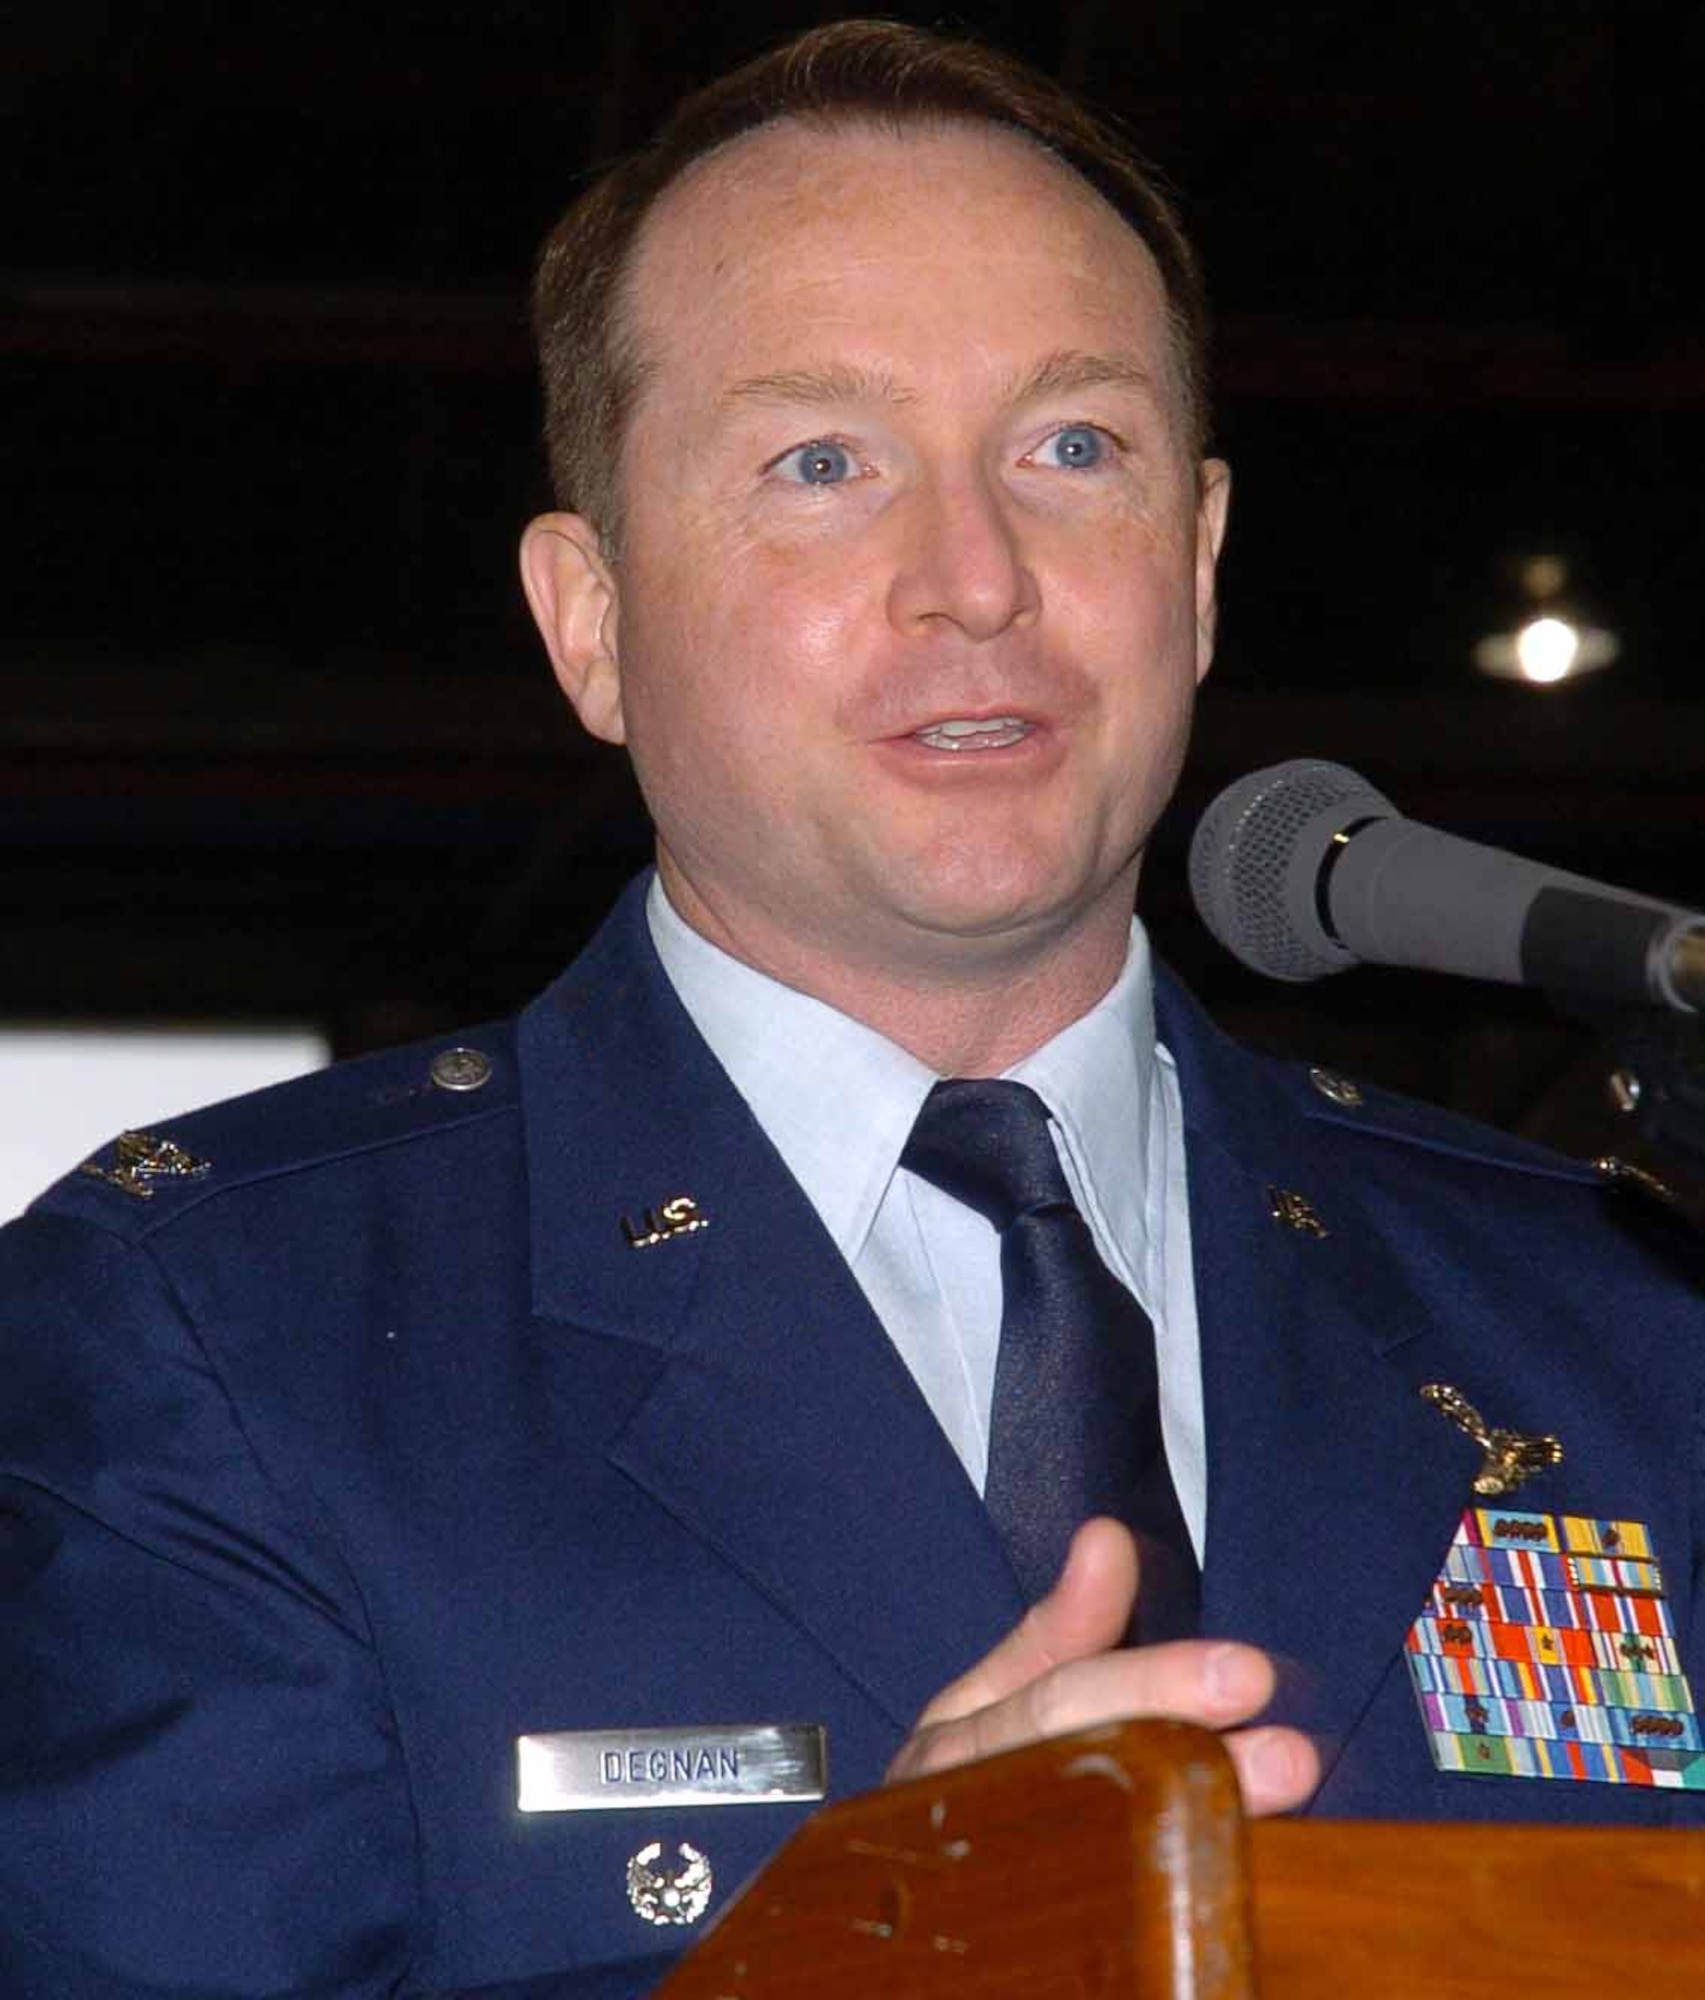 Col. Kevin D. Degnan